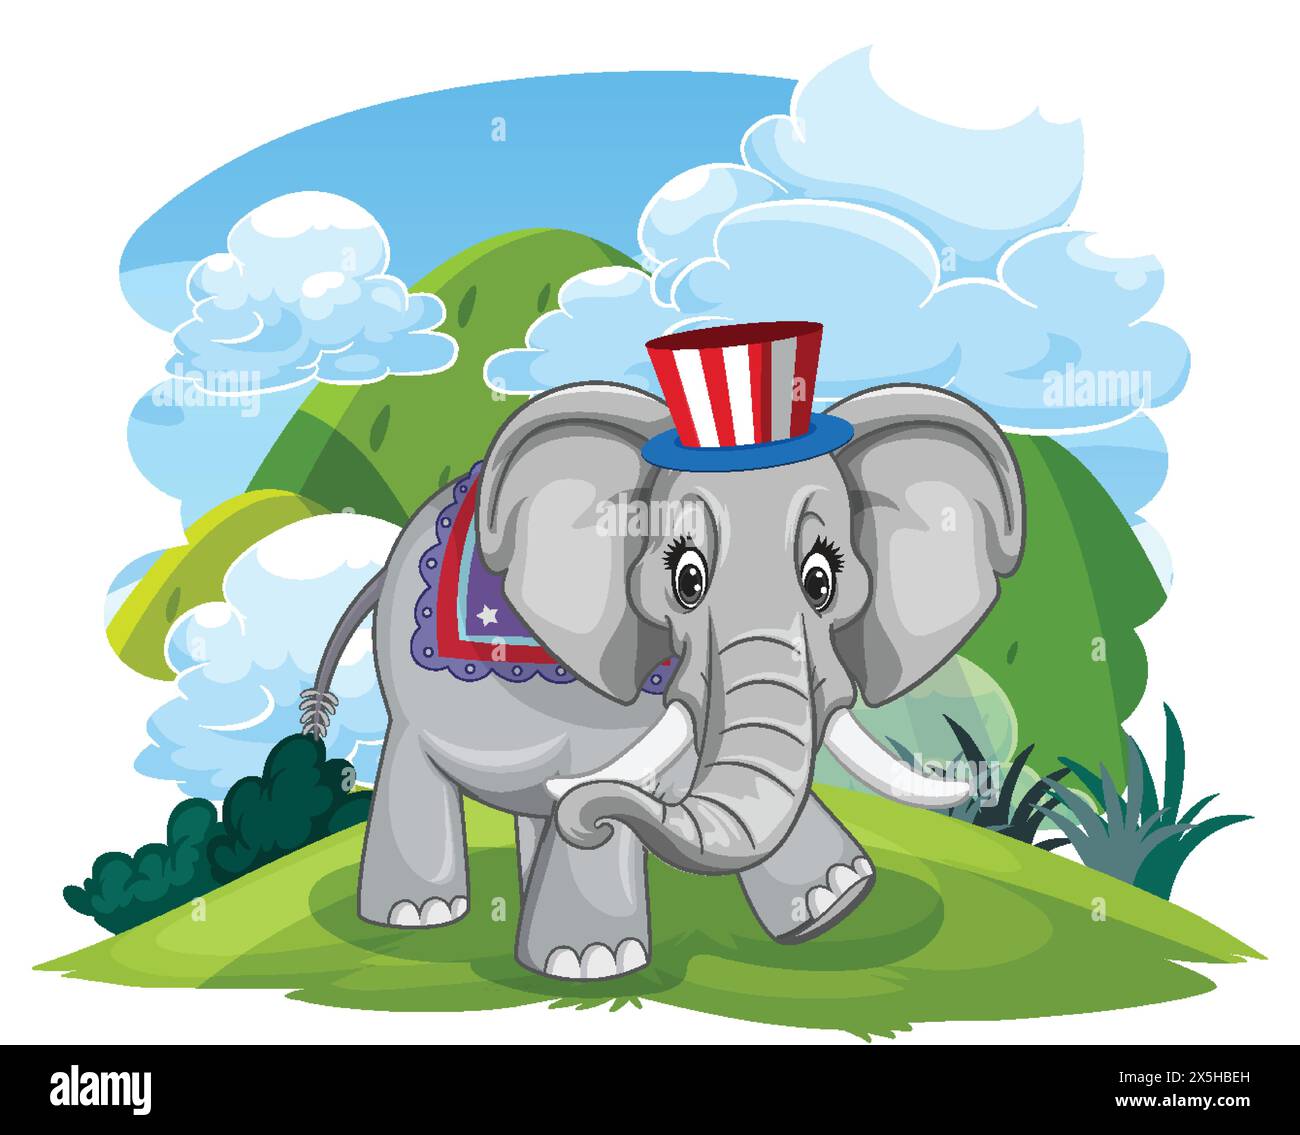 Cartoon-Elefant mit Hut in einer lebhaften Outdoor-Umgebung Stock Vektor